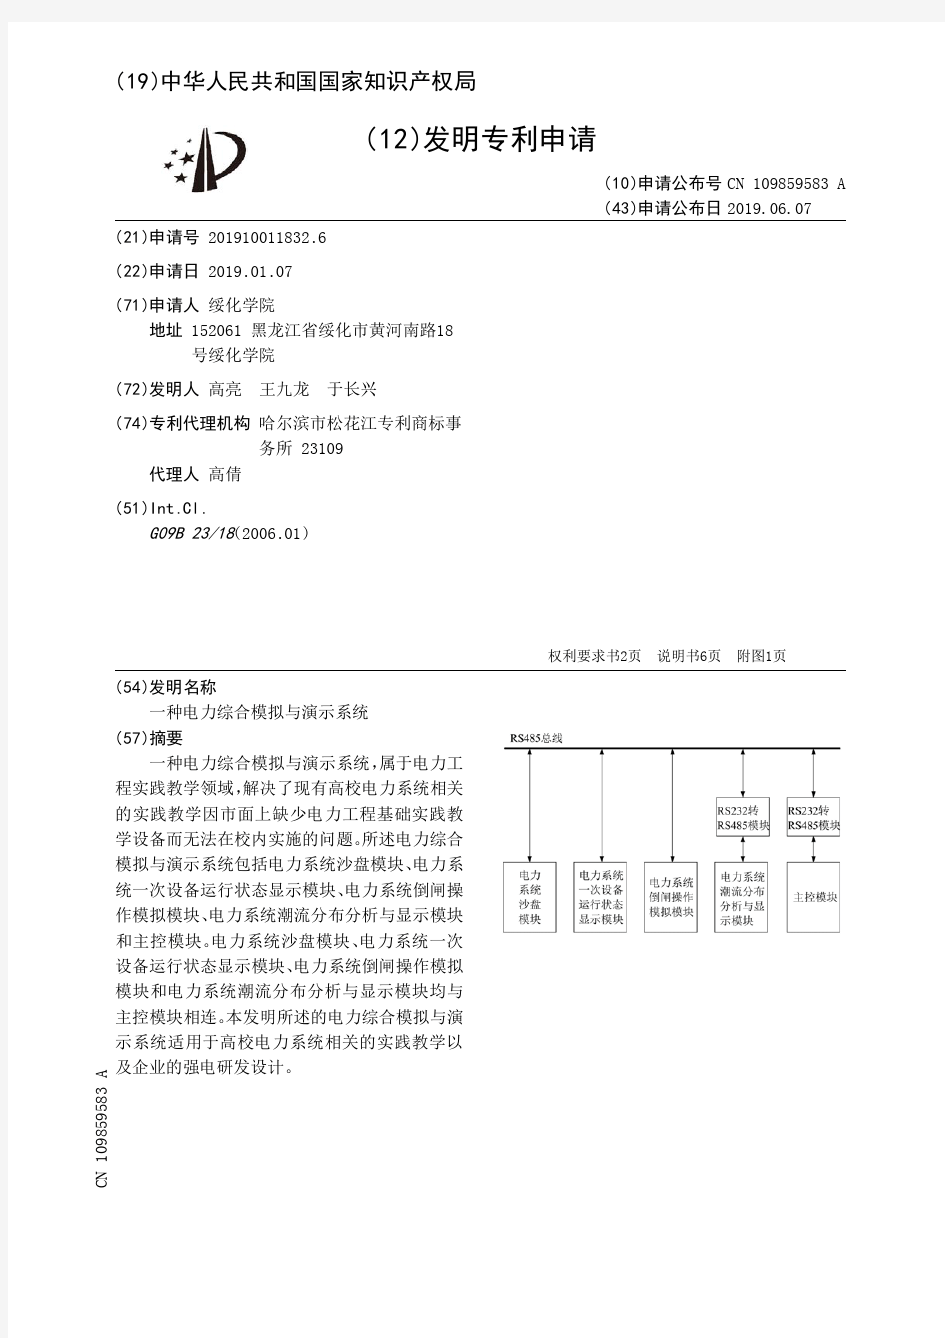 【CN109859583A】一种电力综合模拟与演示系统【专利】